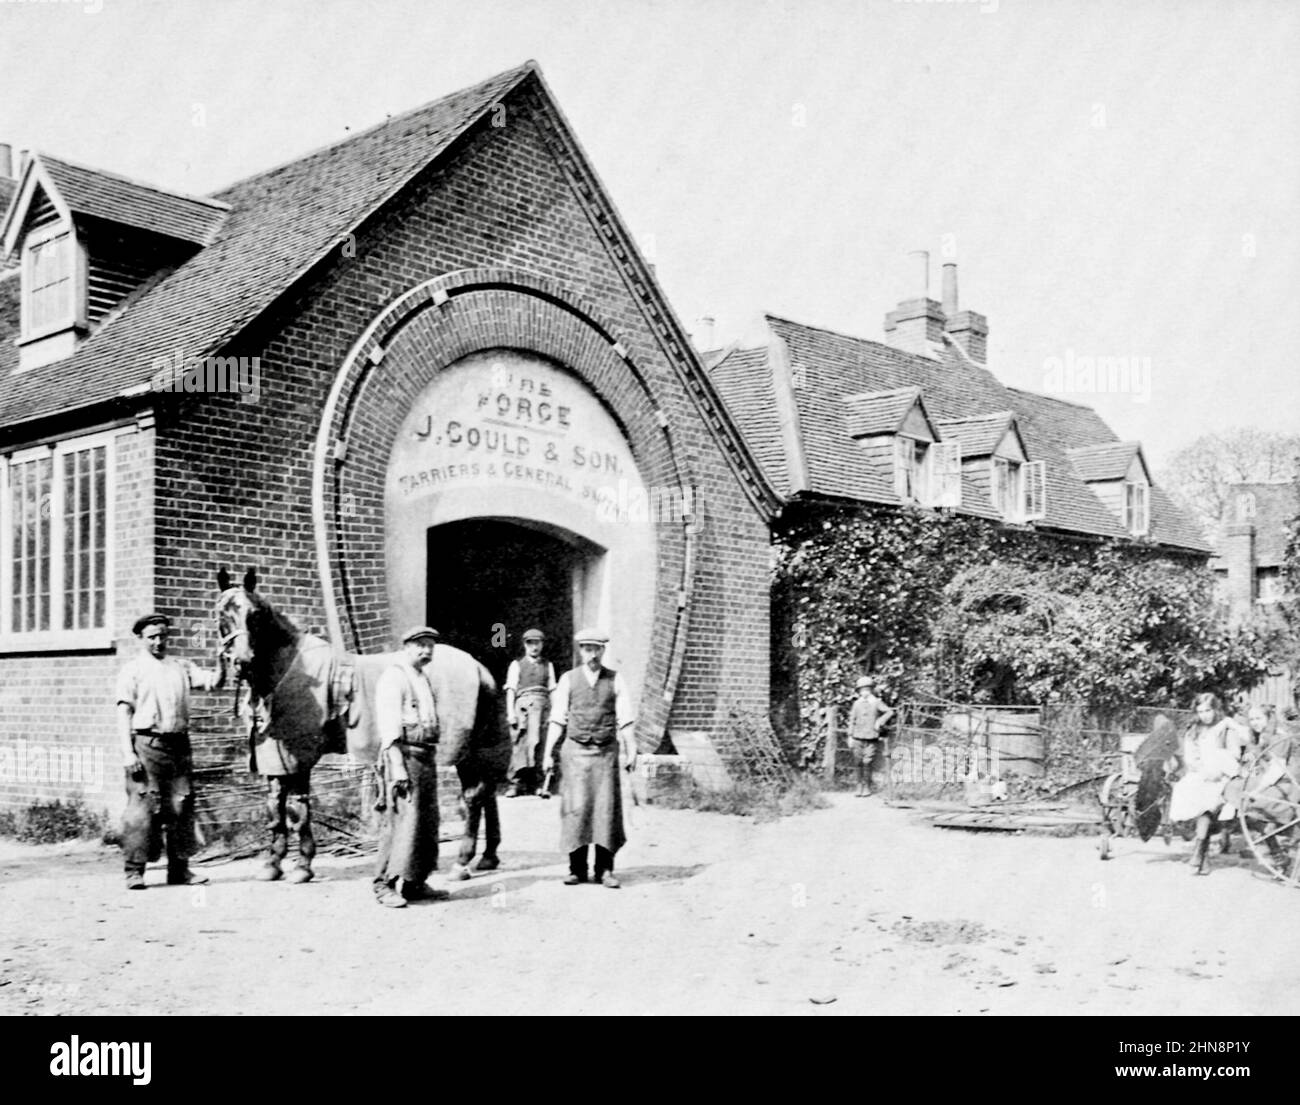 The Forge, Merrow, Surrey, England - Francis Frith Foto - 1913 Stockfoto